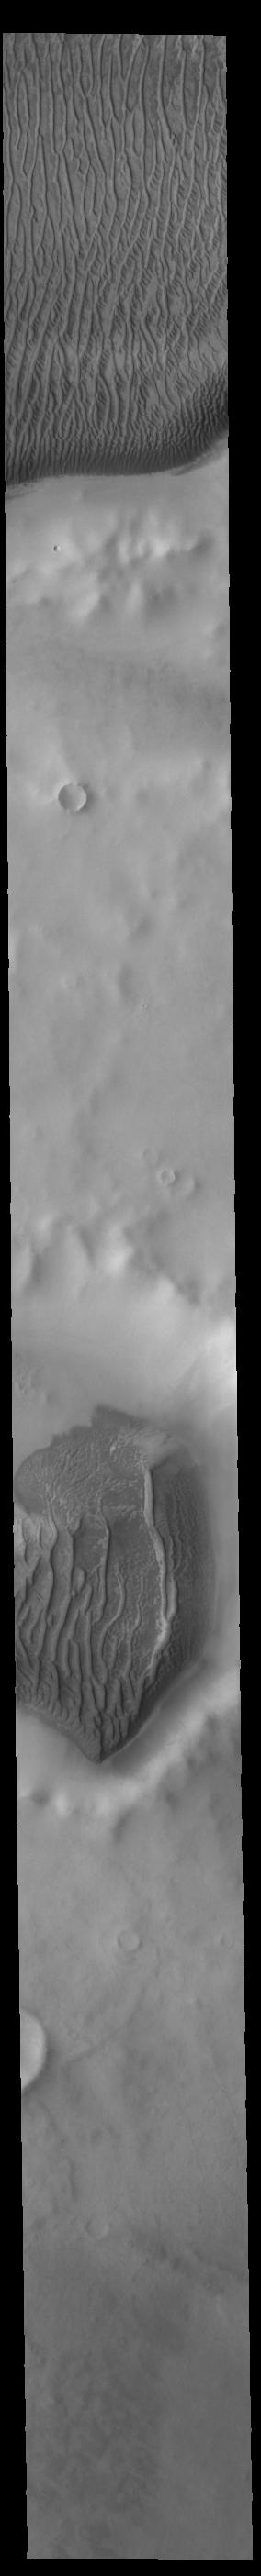 PIA24356: Richardson Crater Dunes